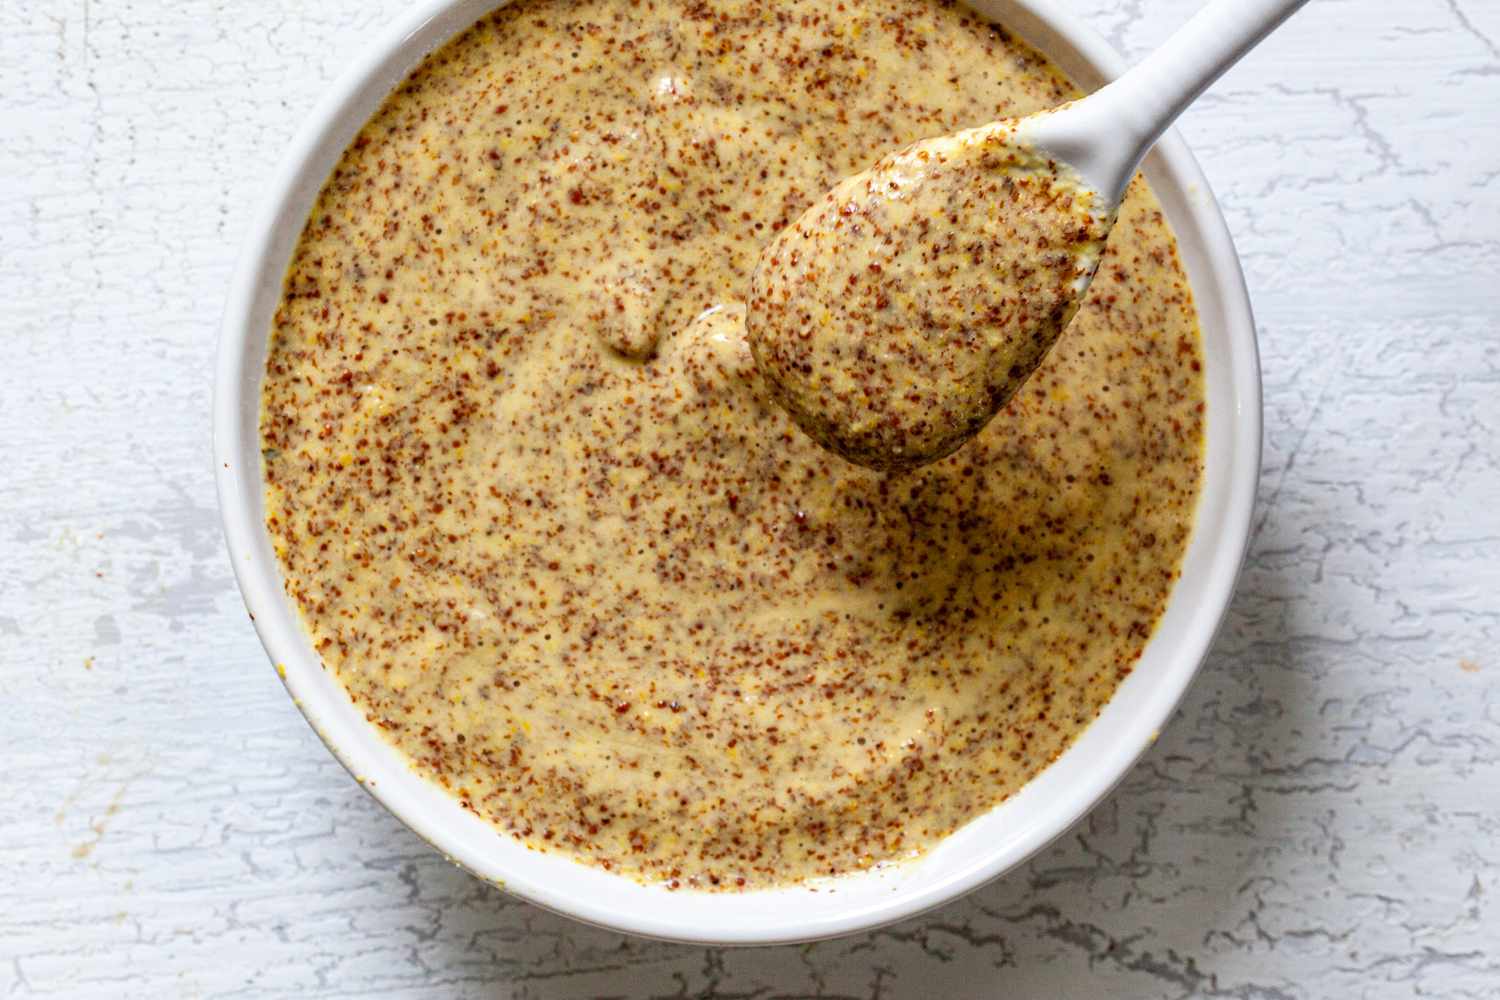 Dijon Mustard in a Bowl